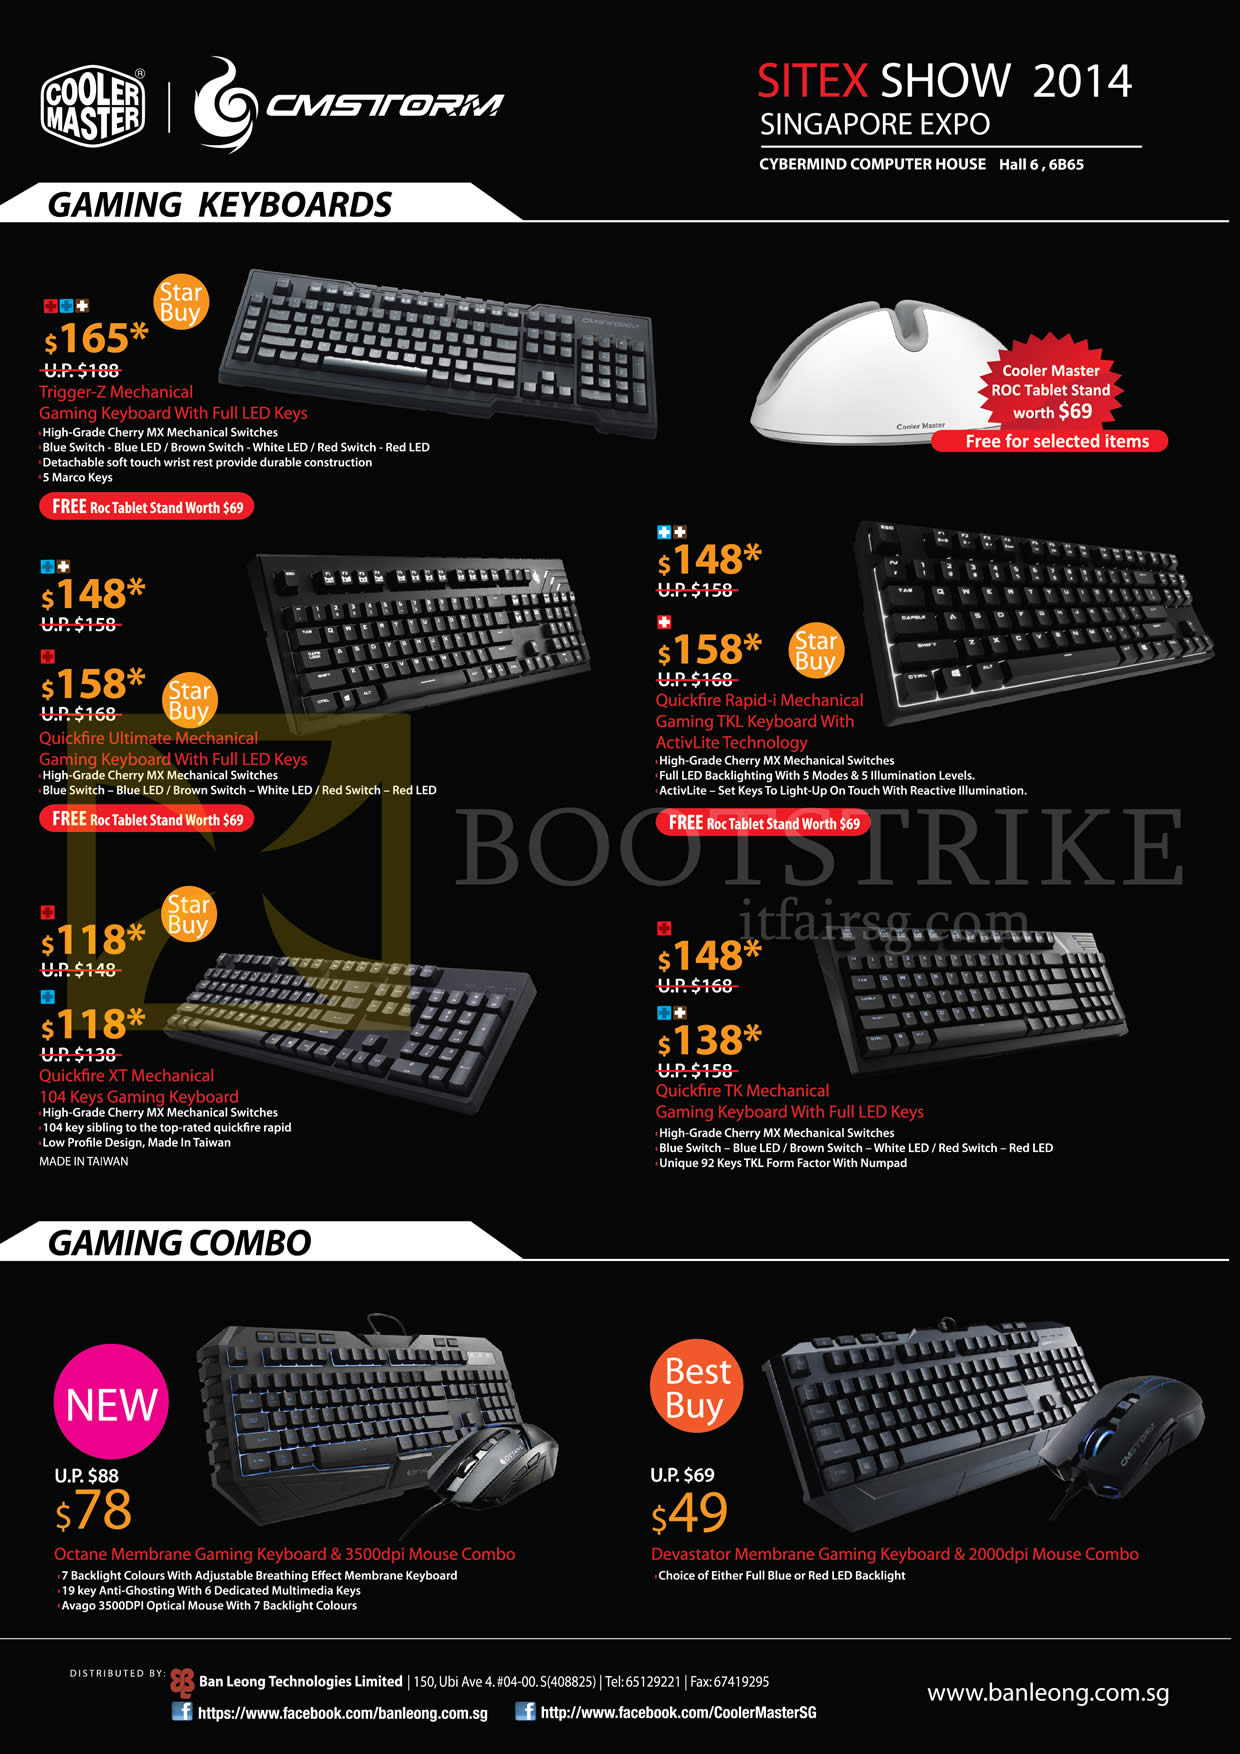 SITEX 2014 price list image brochure of Cybermind Cooler Master Keyboards Trigger-Z Mechanical, Quickfire Ultimate, Quickfire XT, Octane Membrane, Devastator Membrane